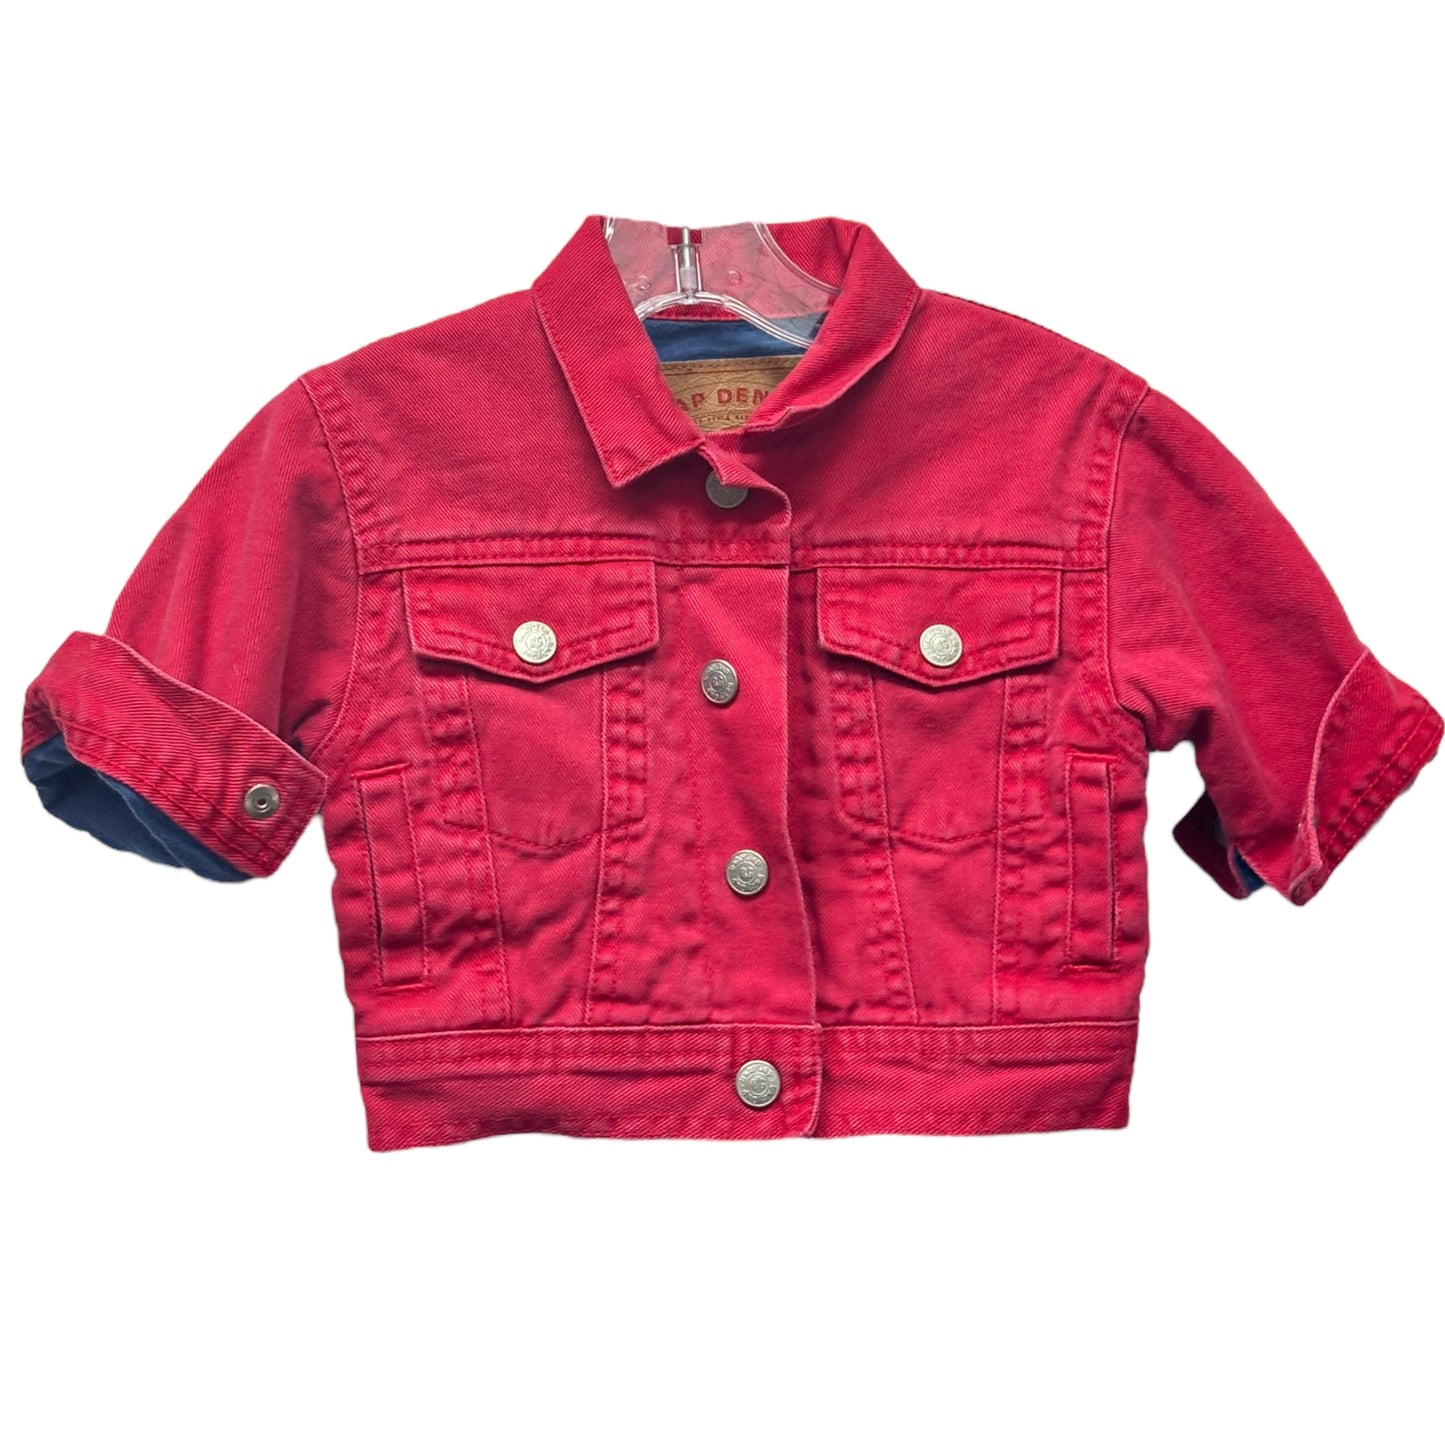 Vintage Baby Gap 6-12 mo Jacket